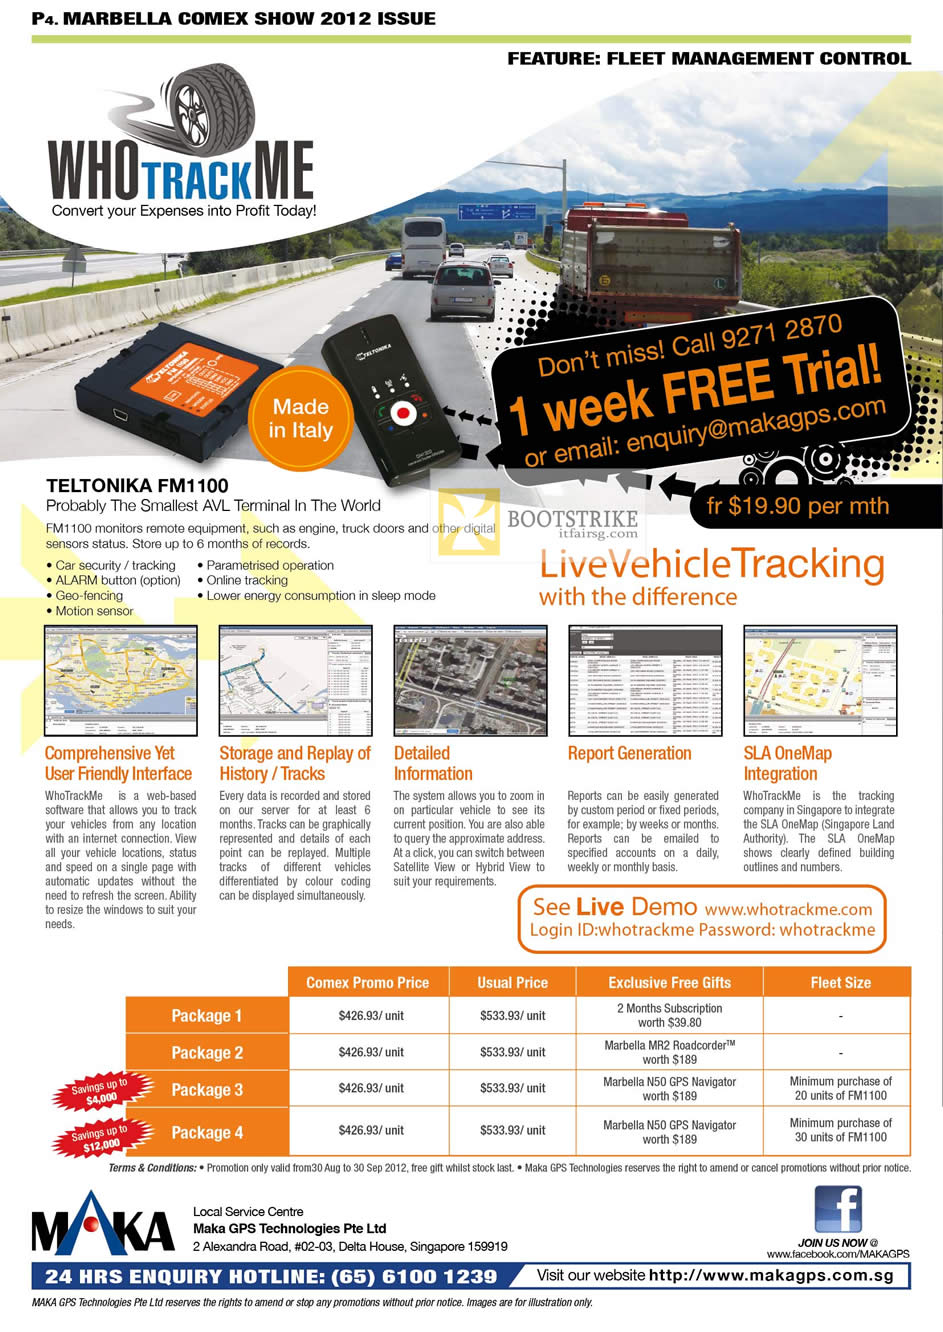 COMEX 2012 price list image brochure of Maka GPS Teltonika FM1100, Live Vehicle Tracking, SLA